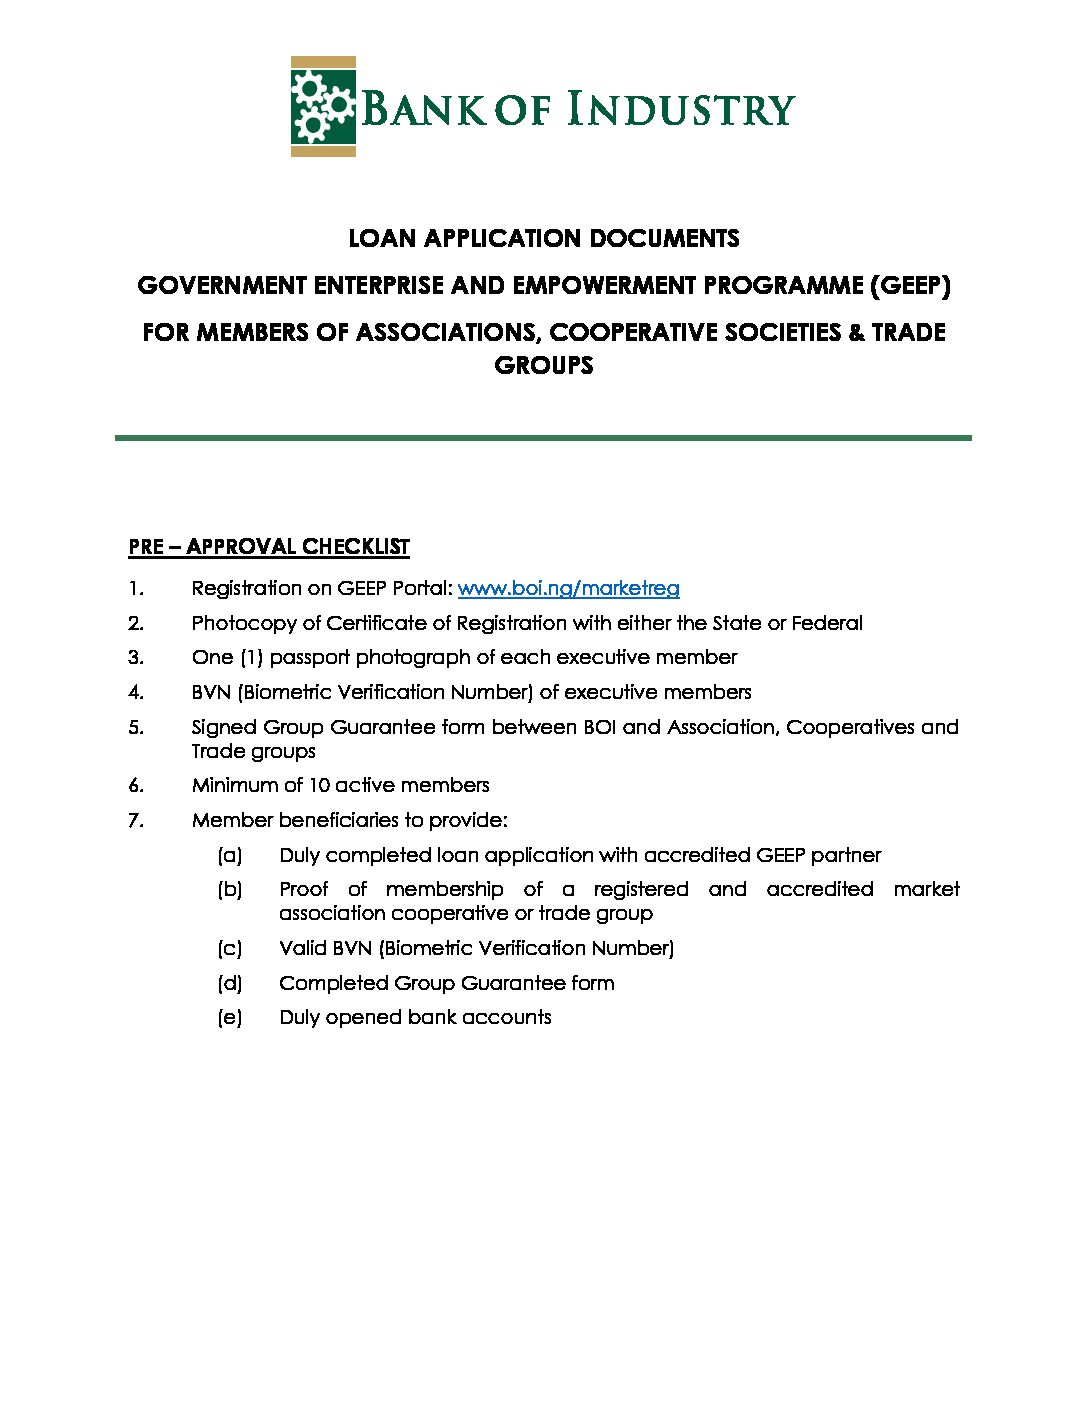 LOAN APPLICATION CHECKLIST GEEP 1 pdf P-yes application